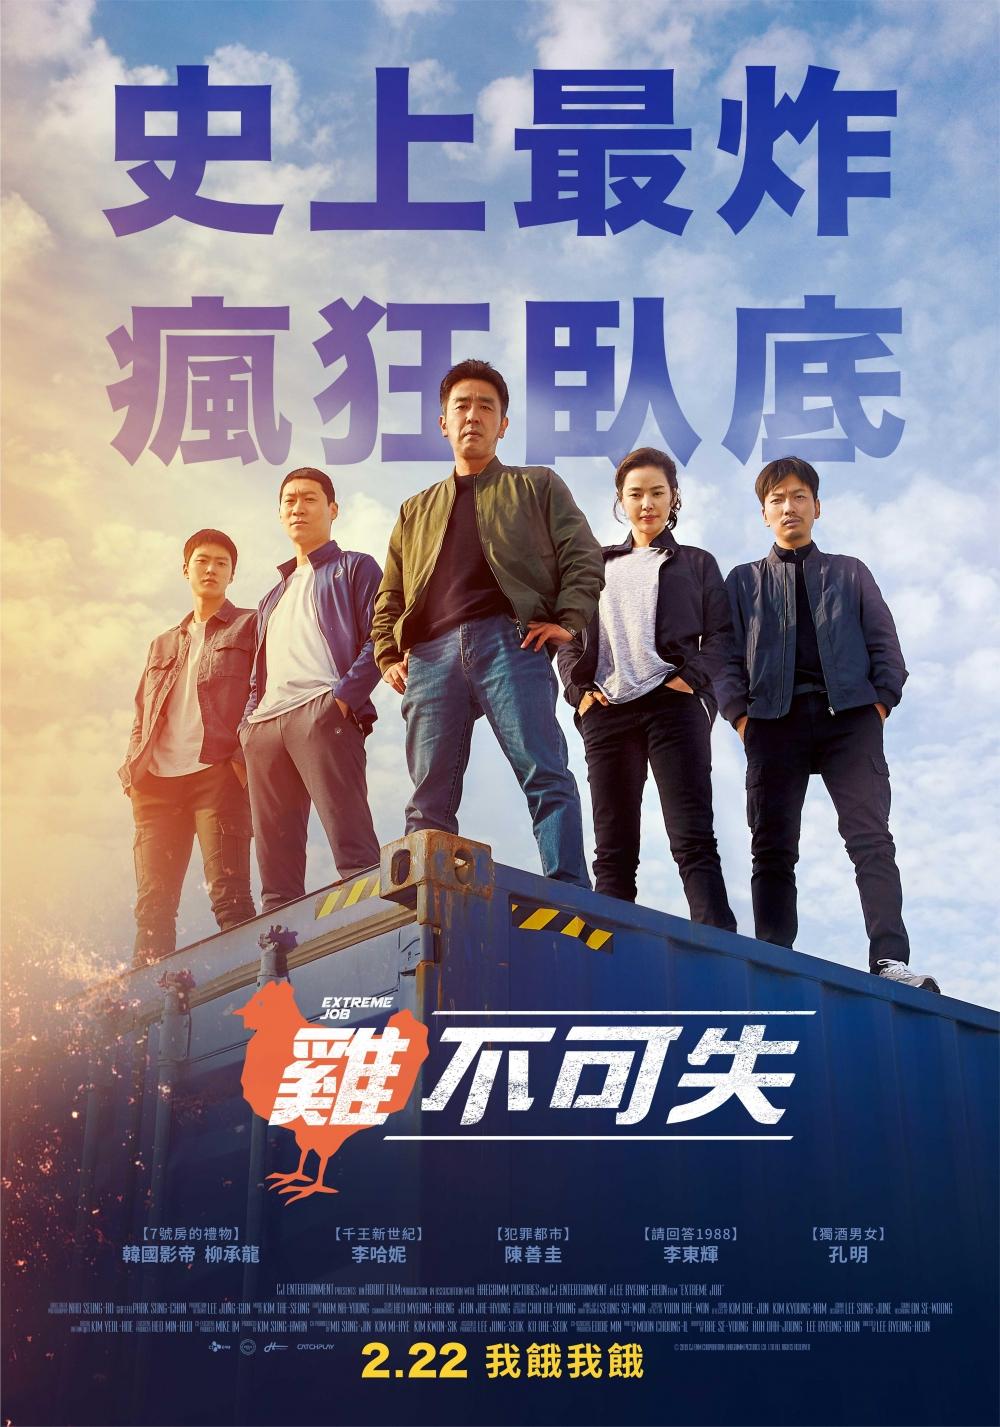 Taiwan Poster